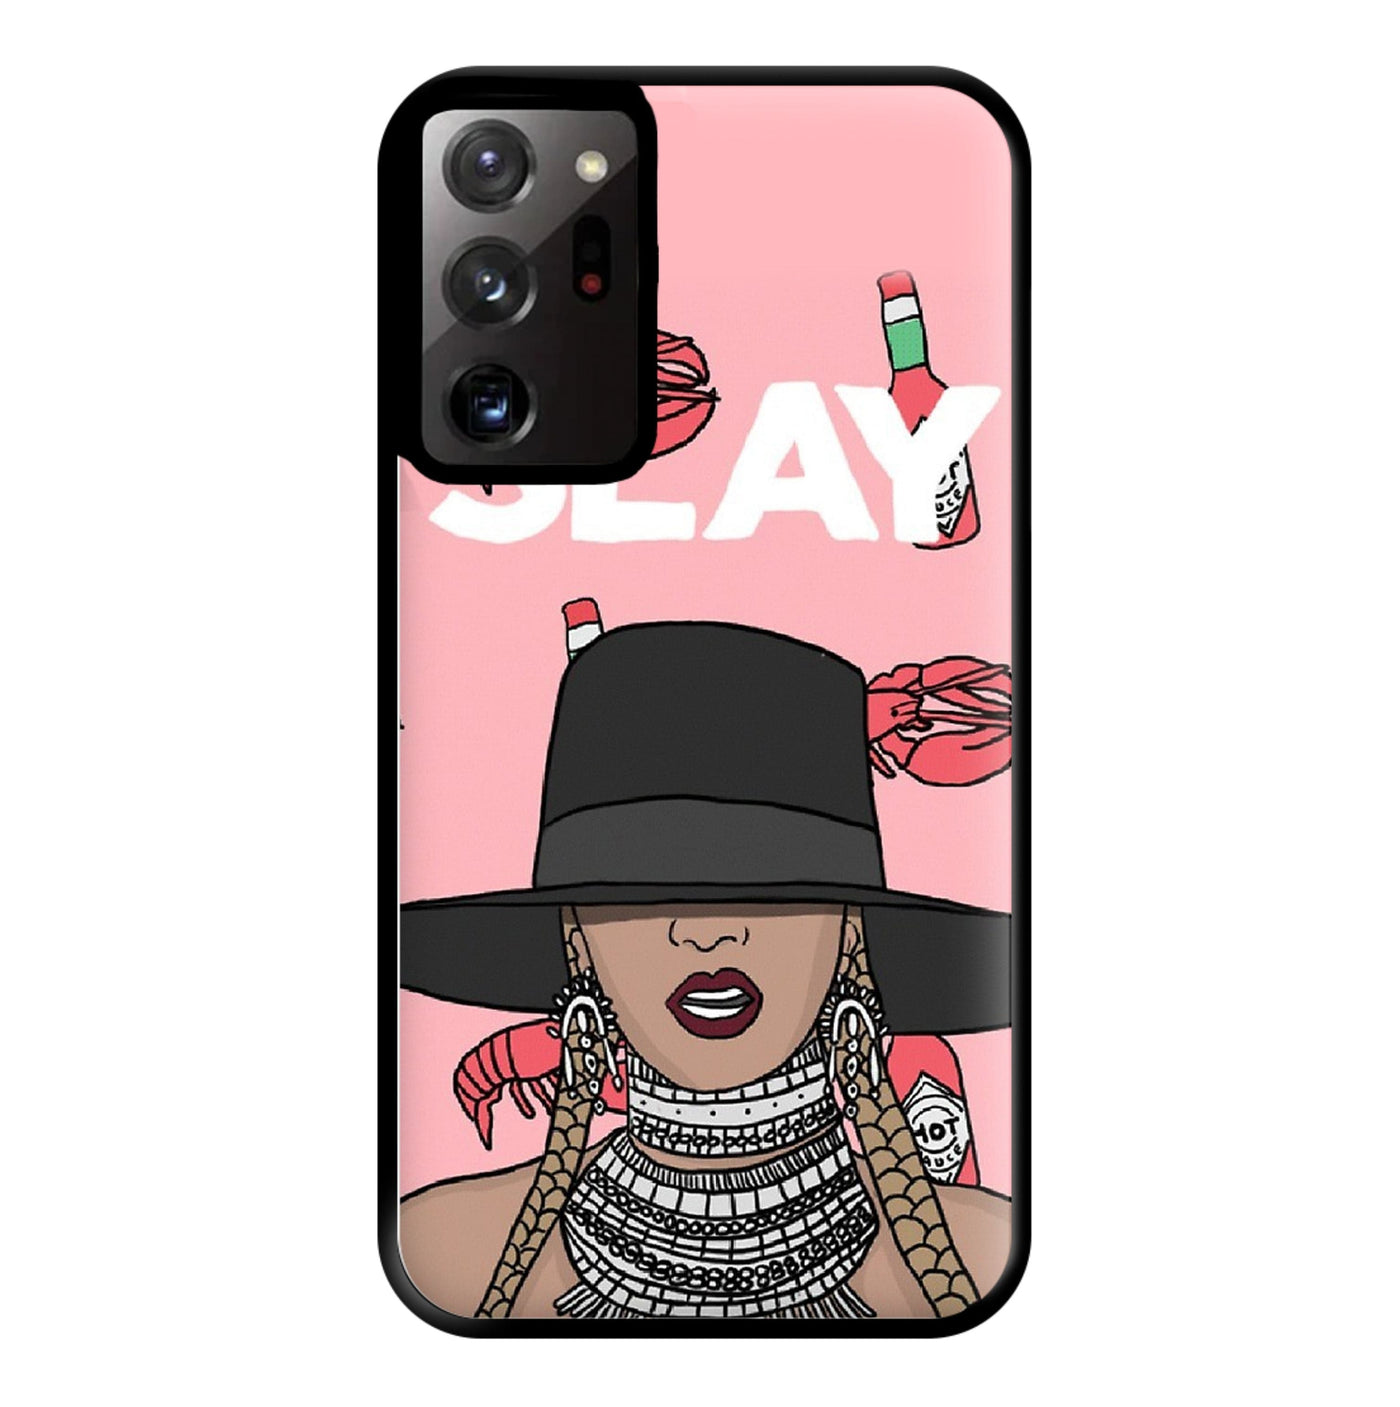 Slay - Beyonce Cartoon Phone Case